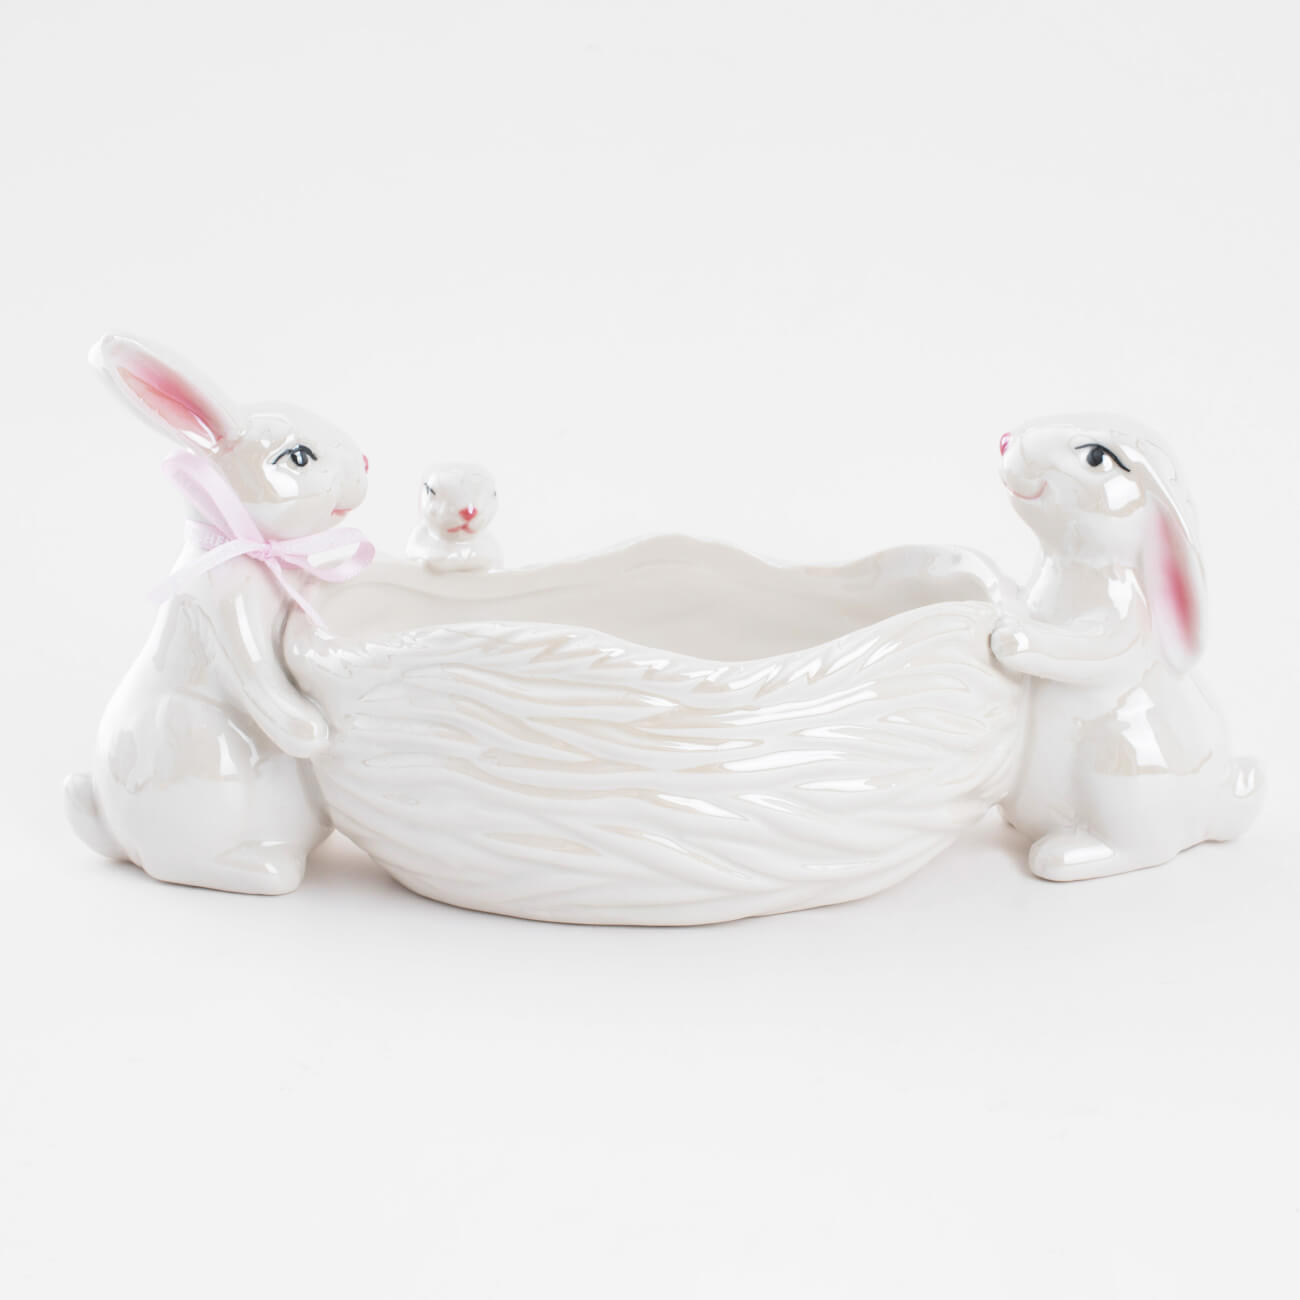 Конфетница, 29х13 см, фарфор P, белая, перламутр, Три кролика у корзины, Easter конфетница